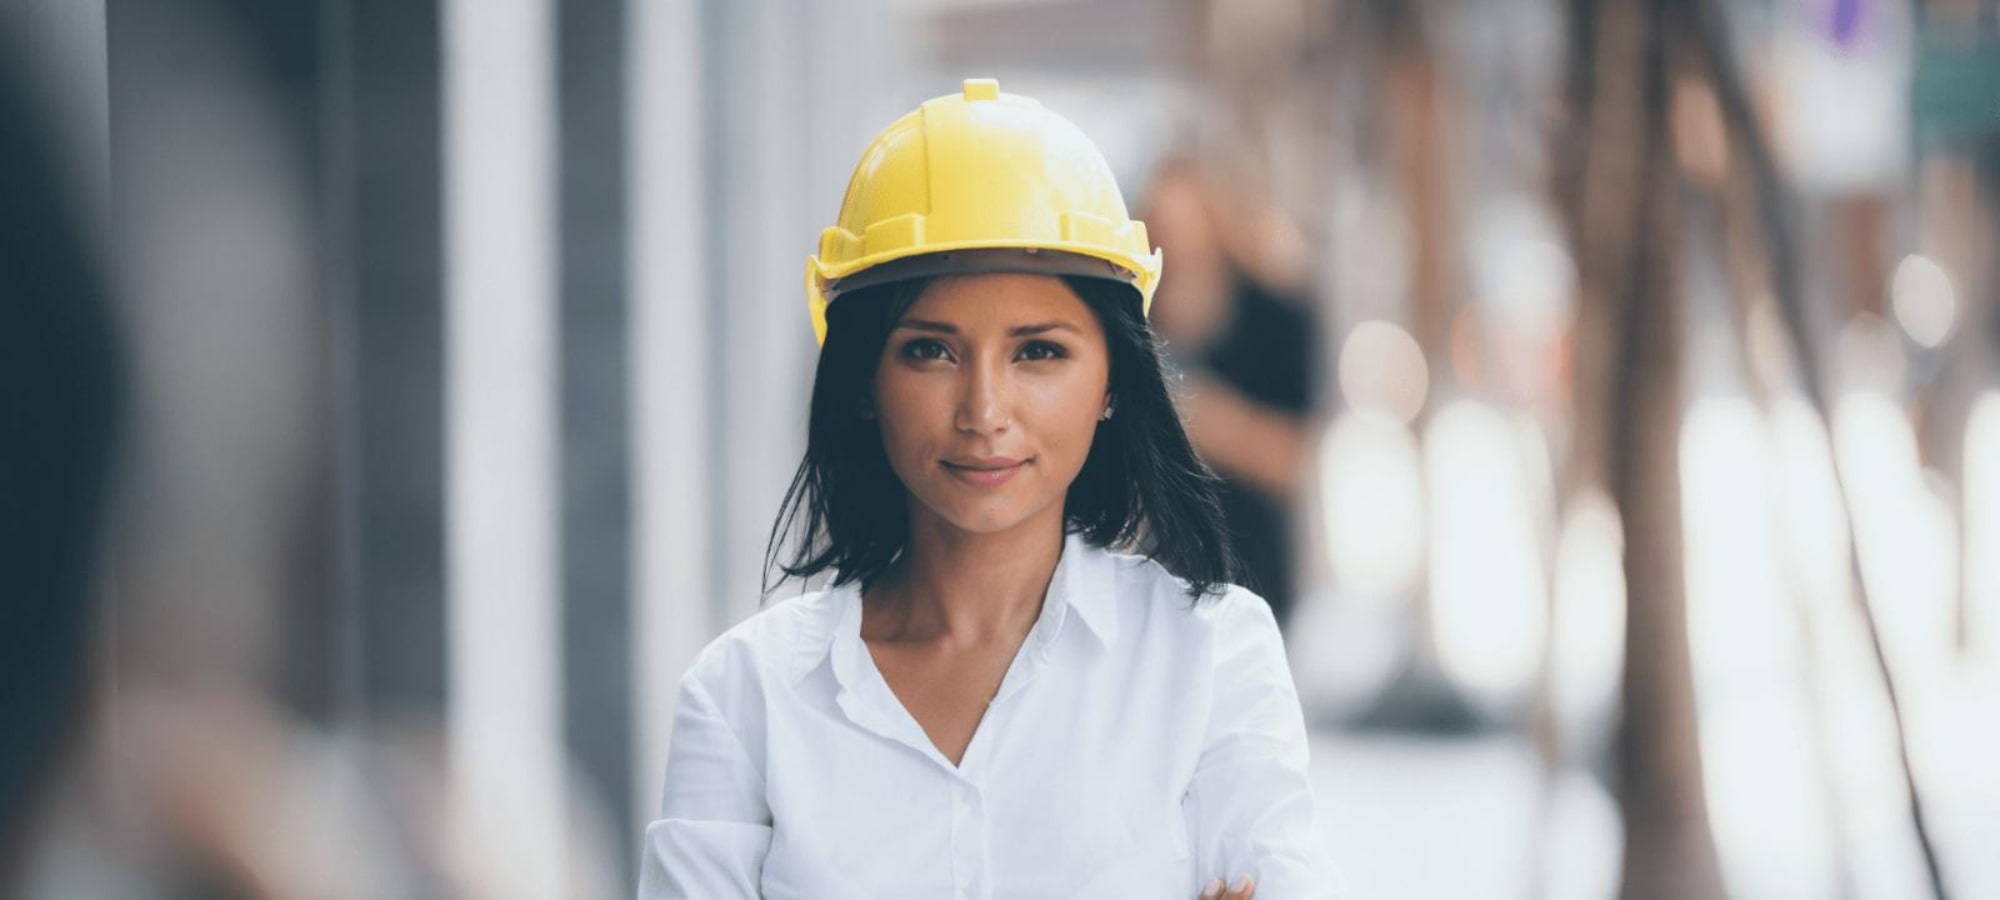 Female construction manager onsite ersg